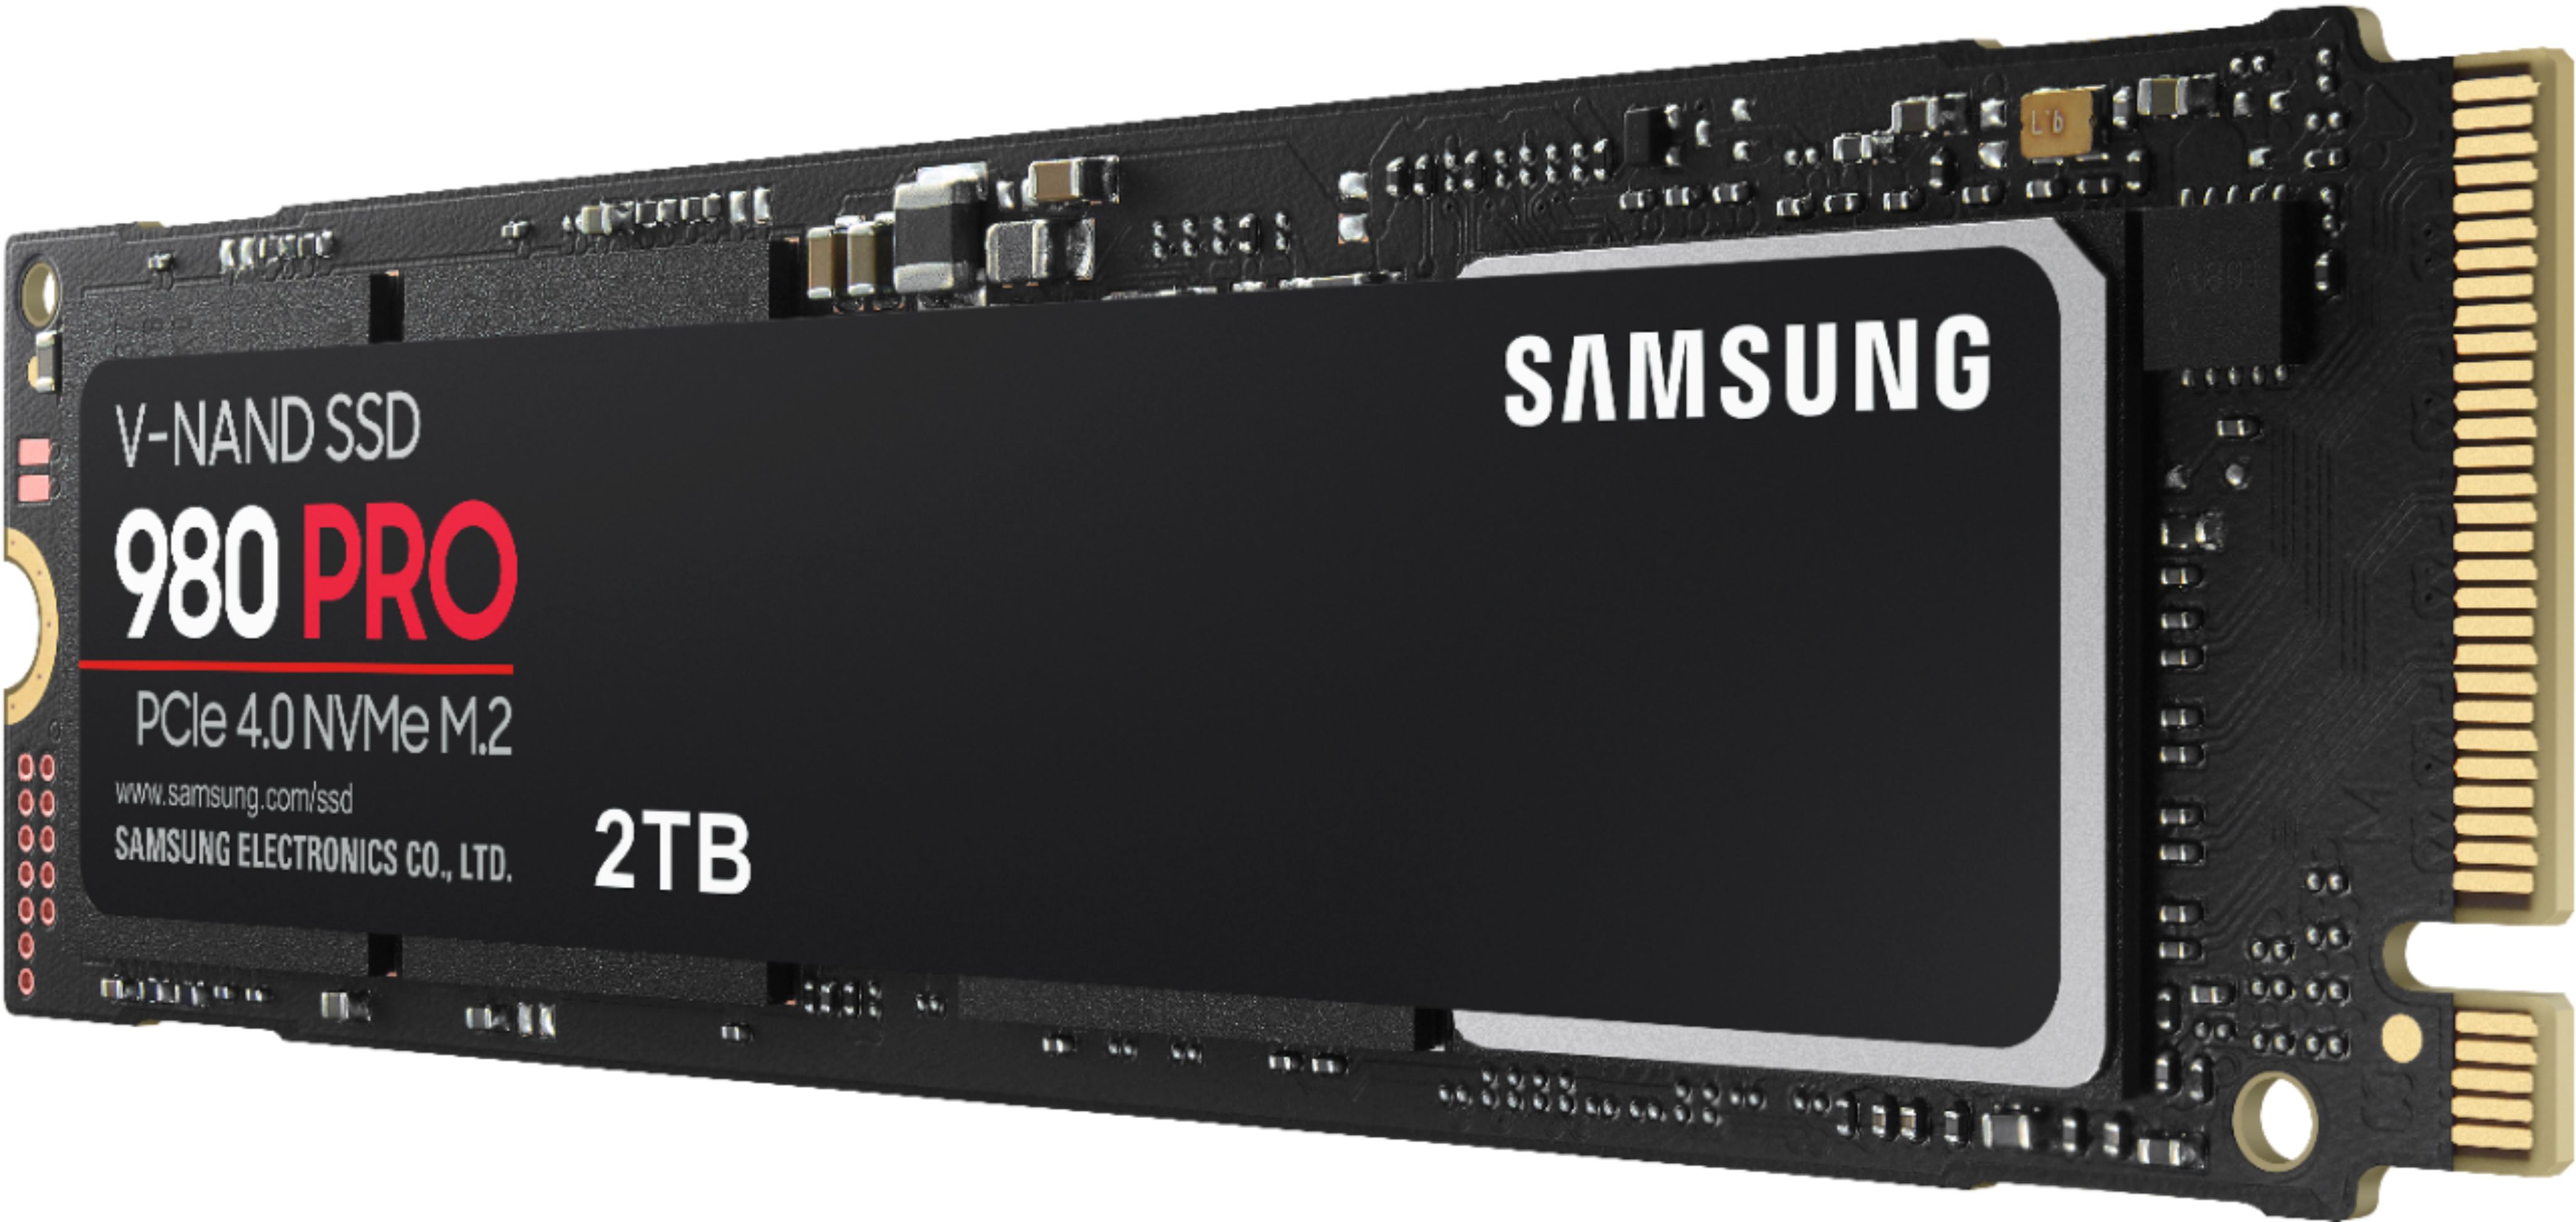 Samsung 980 PRO 2TB Internal Gaming SSD PCIe Gen 4 NVMe - Buy